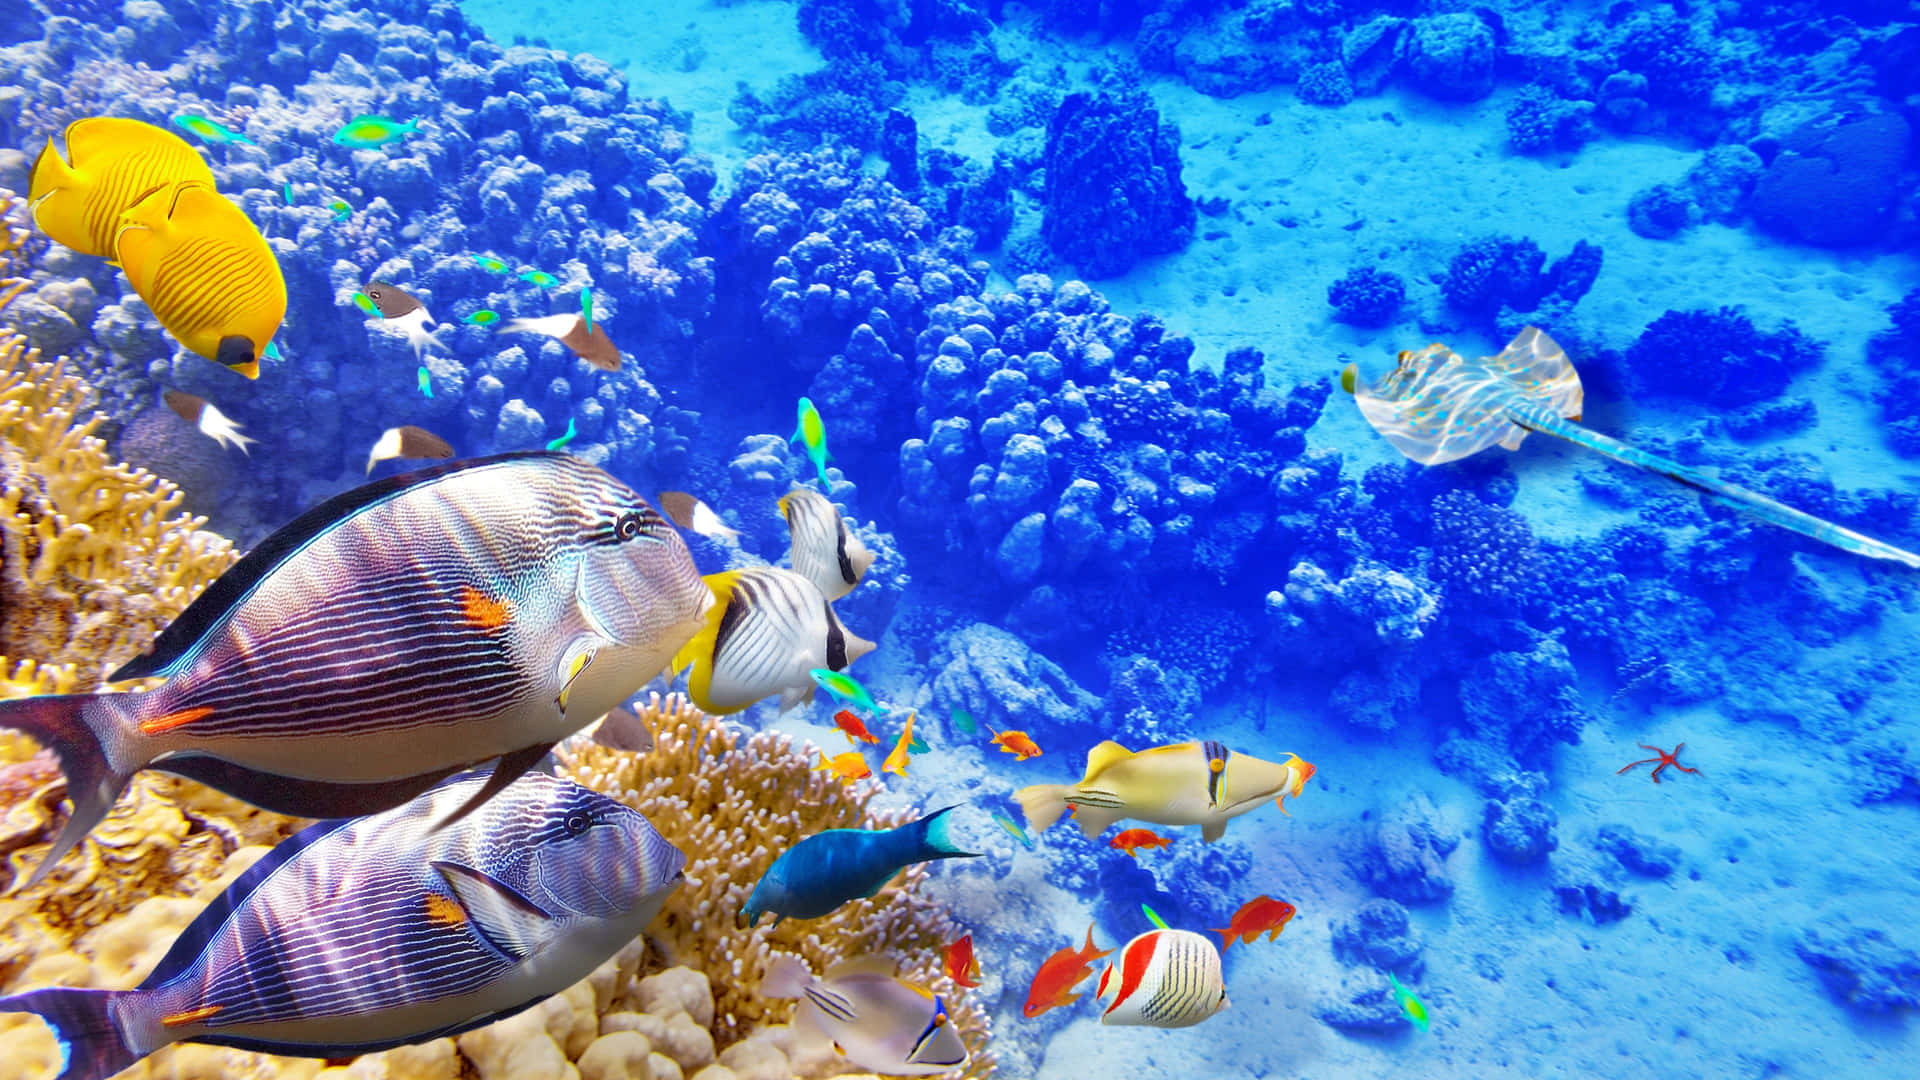 Escenasubmarina De Arrecife De Coral Colorido.